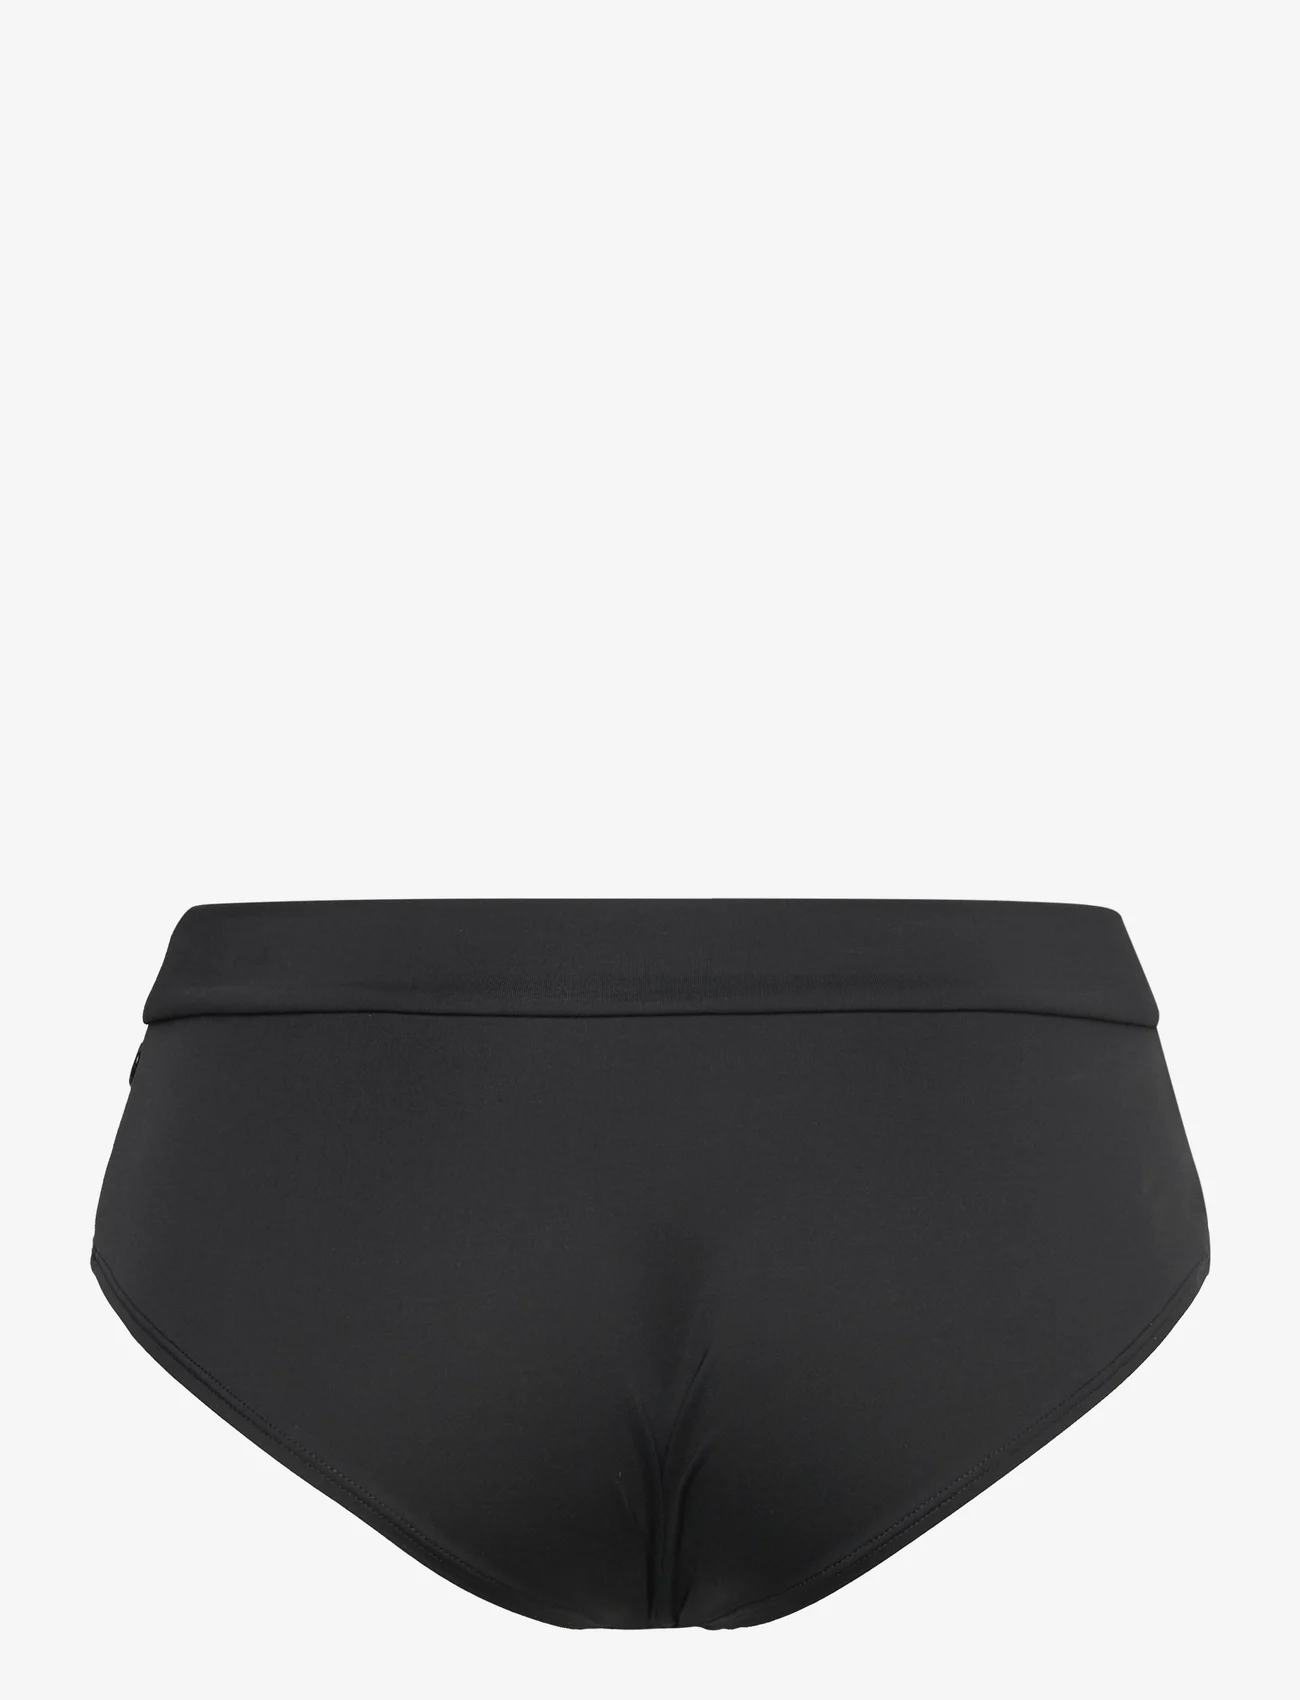 Panos Emporio - Melina Solid Bottom - bikinihousut - black - 1